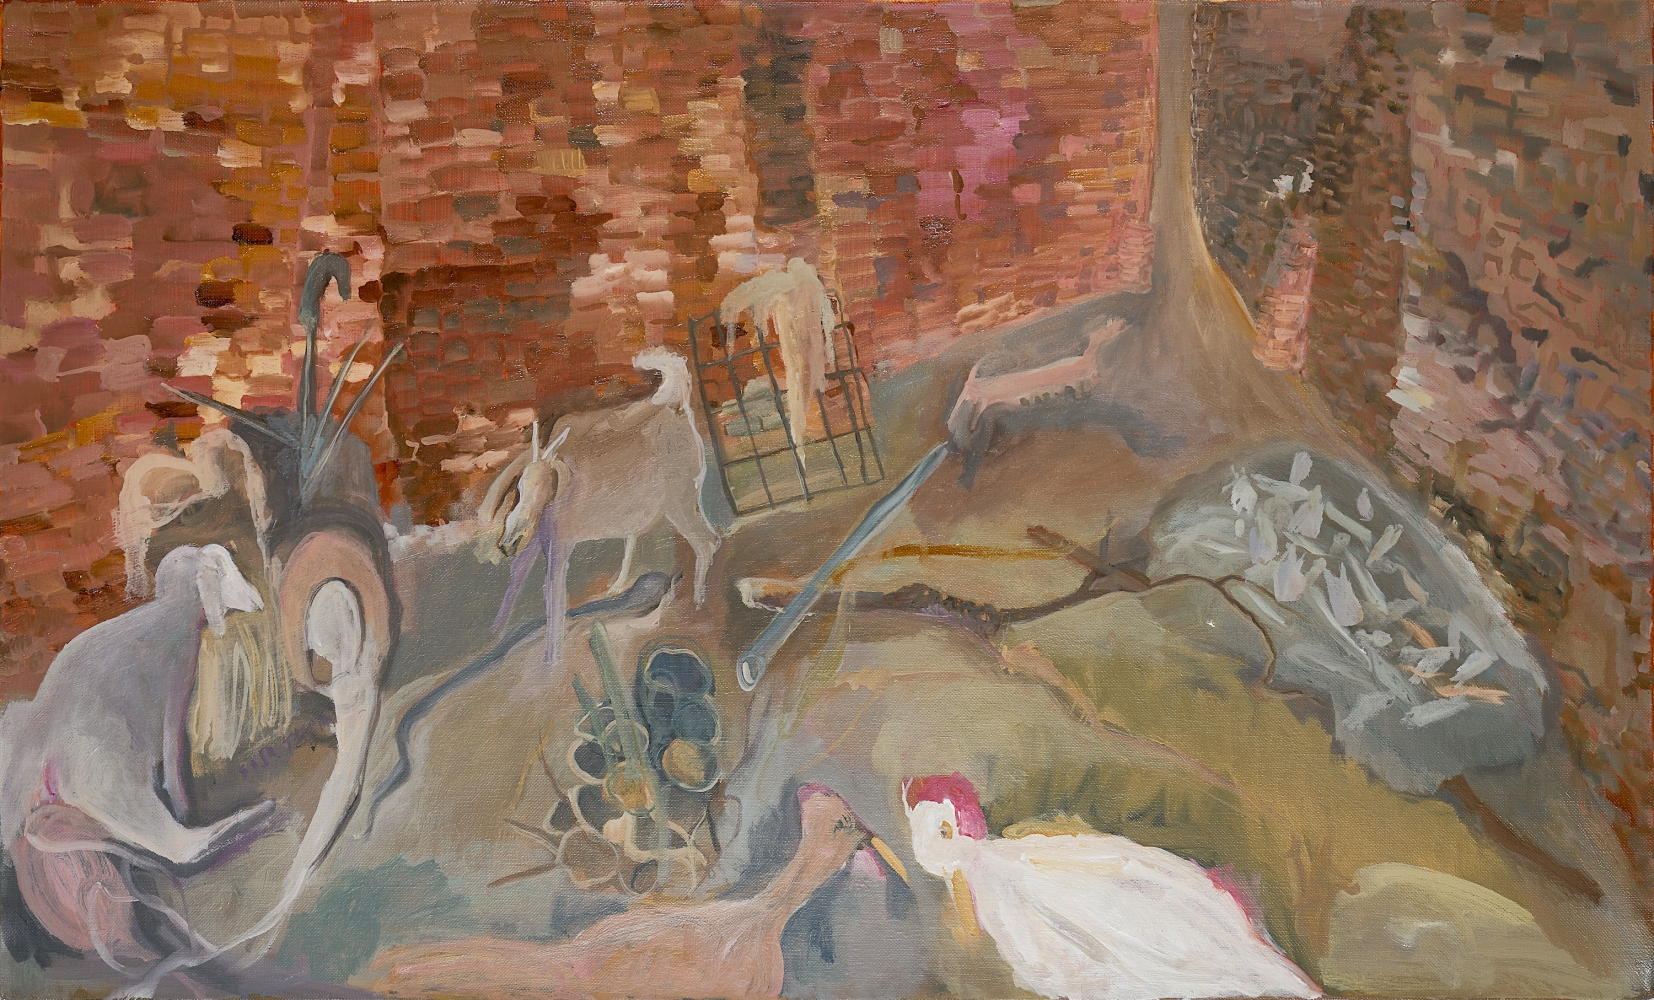 SOSA JOSEPH, Leftover, 2018, oil on canvas, 23.7 x 39.3 in / 60.4 x 100 cm